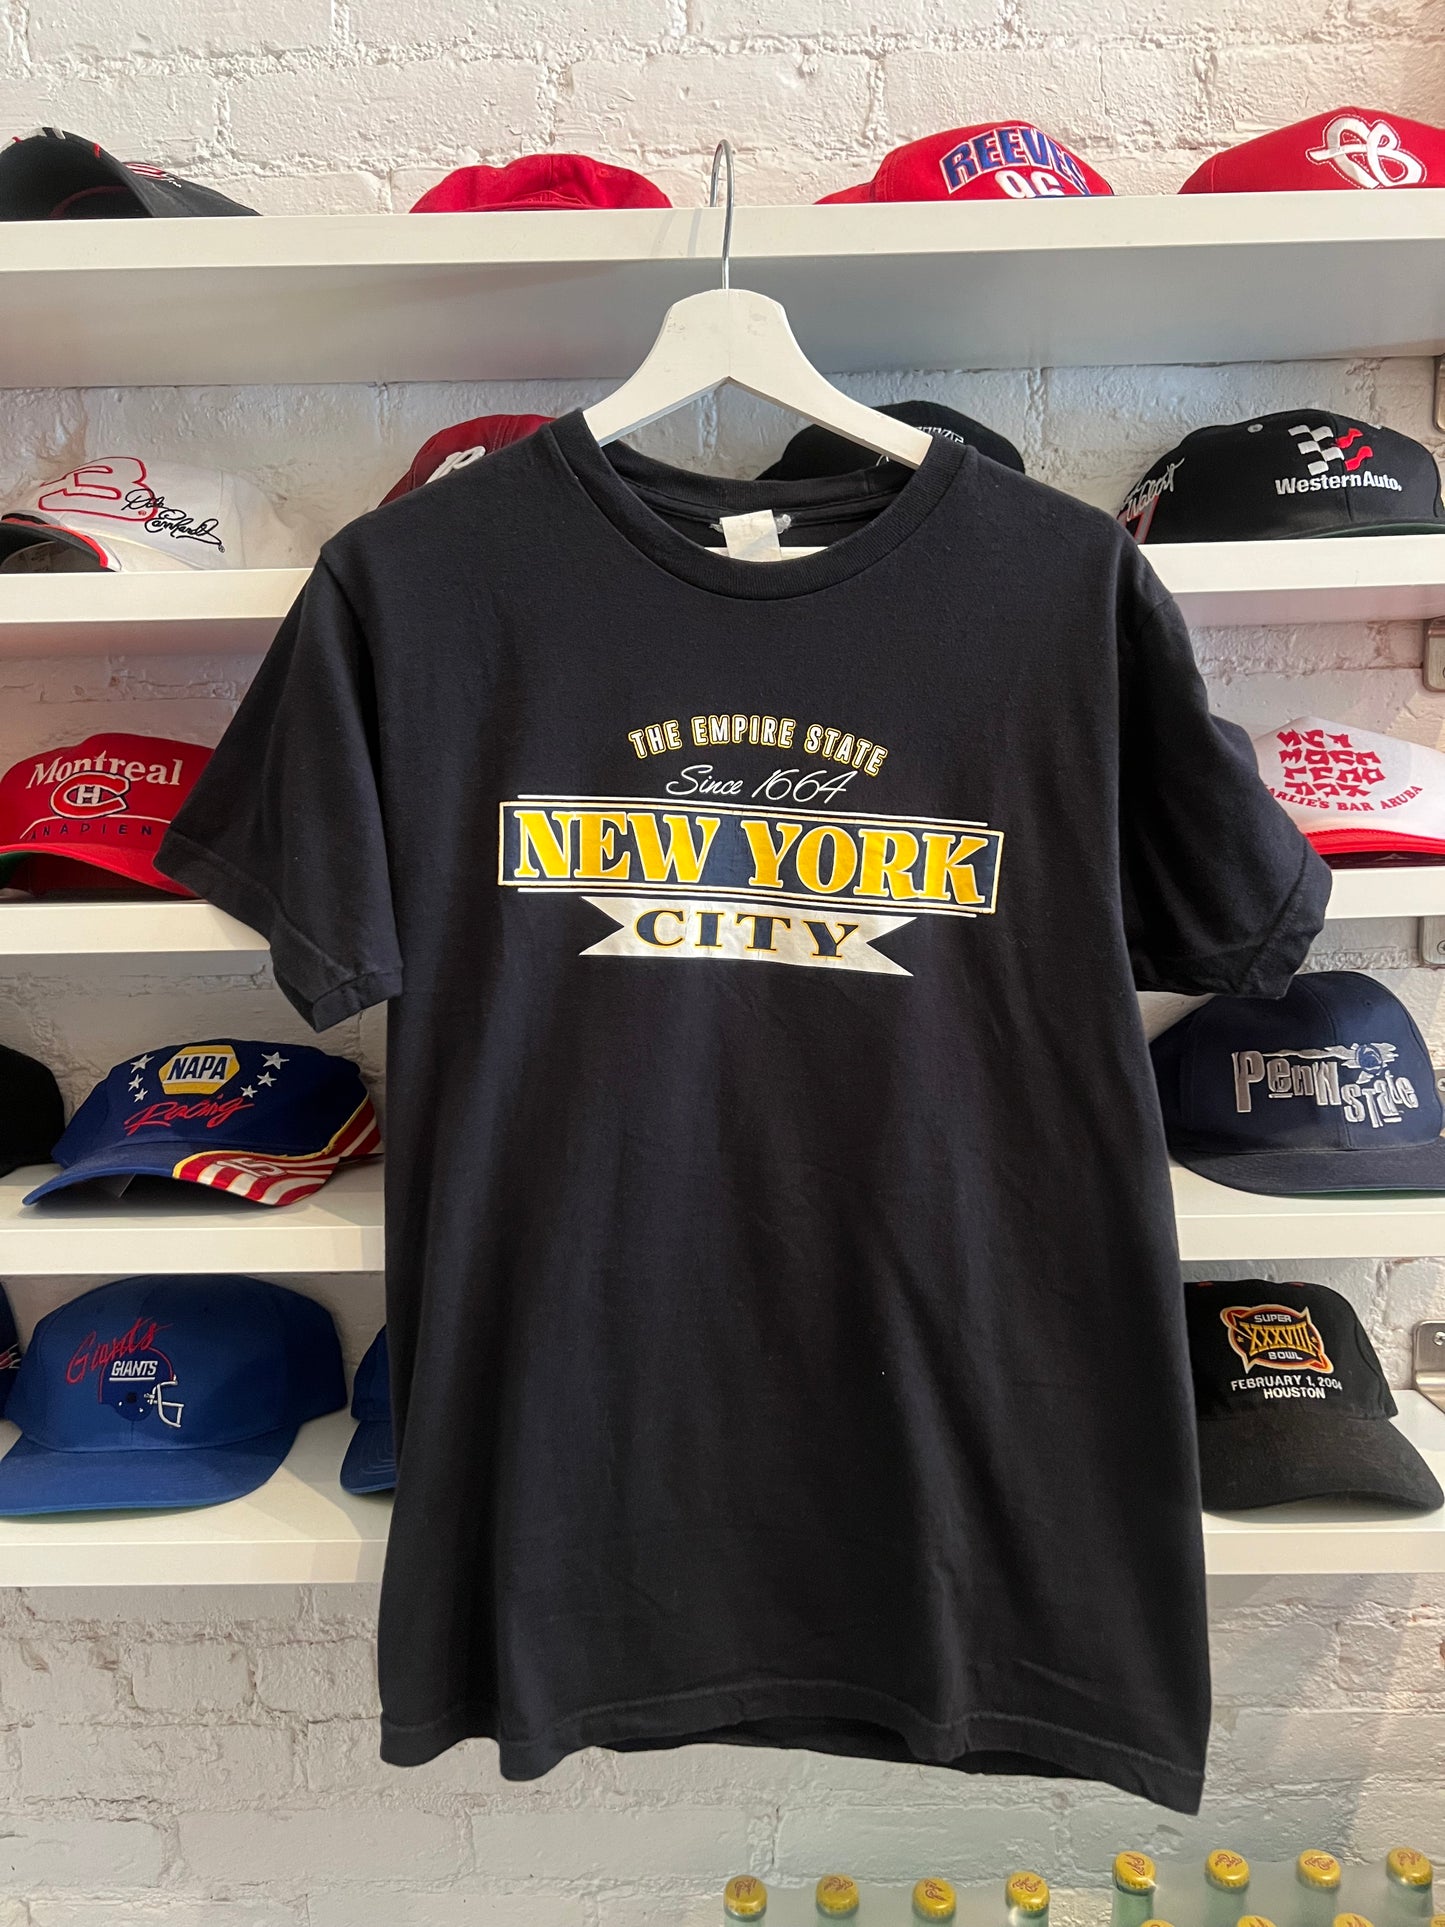 New York City T-shirt size L